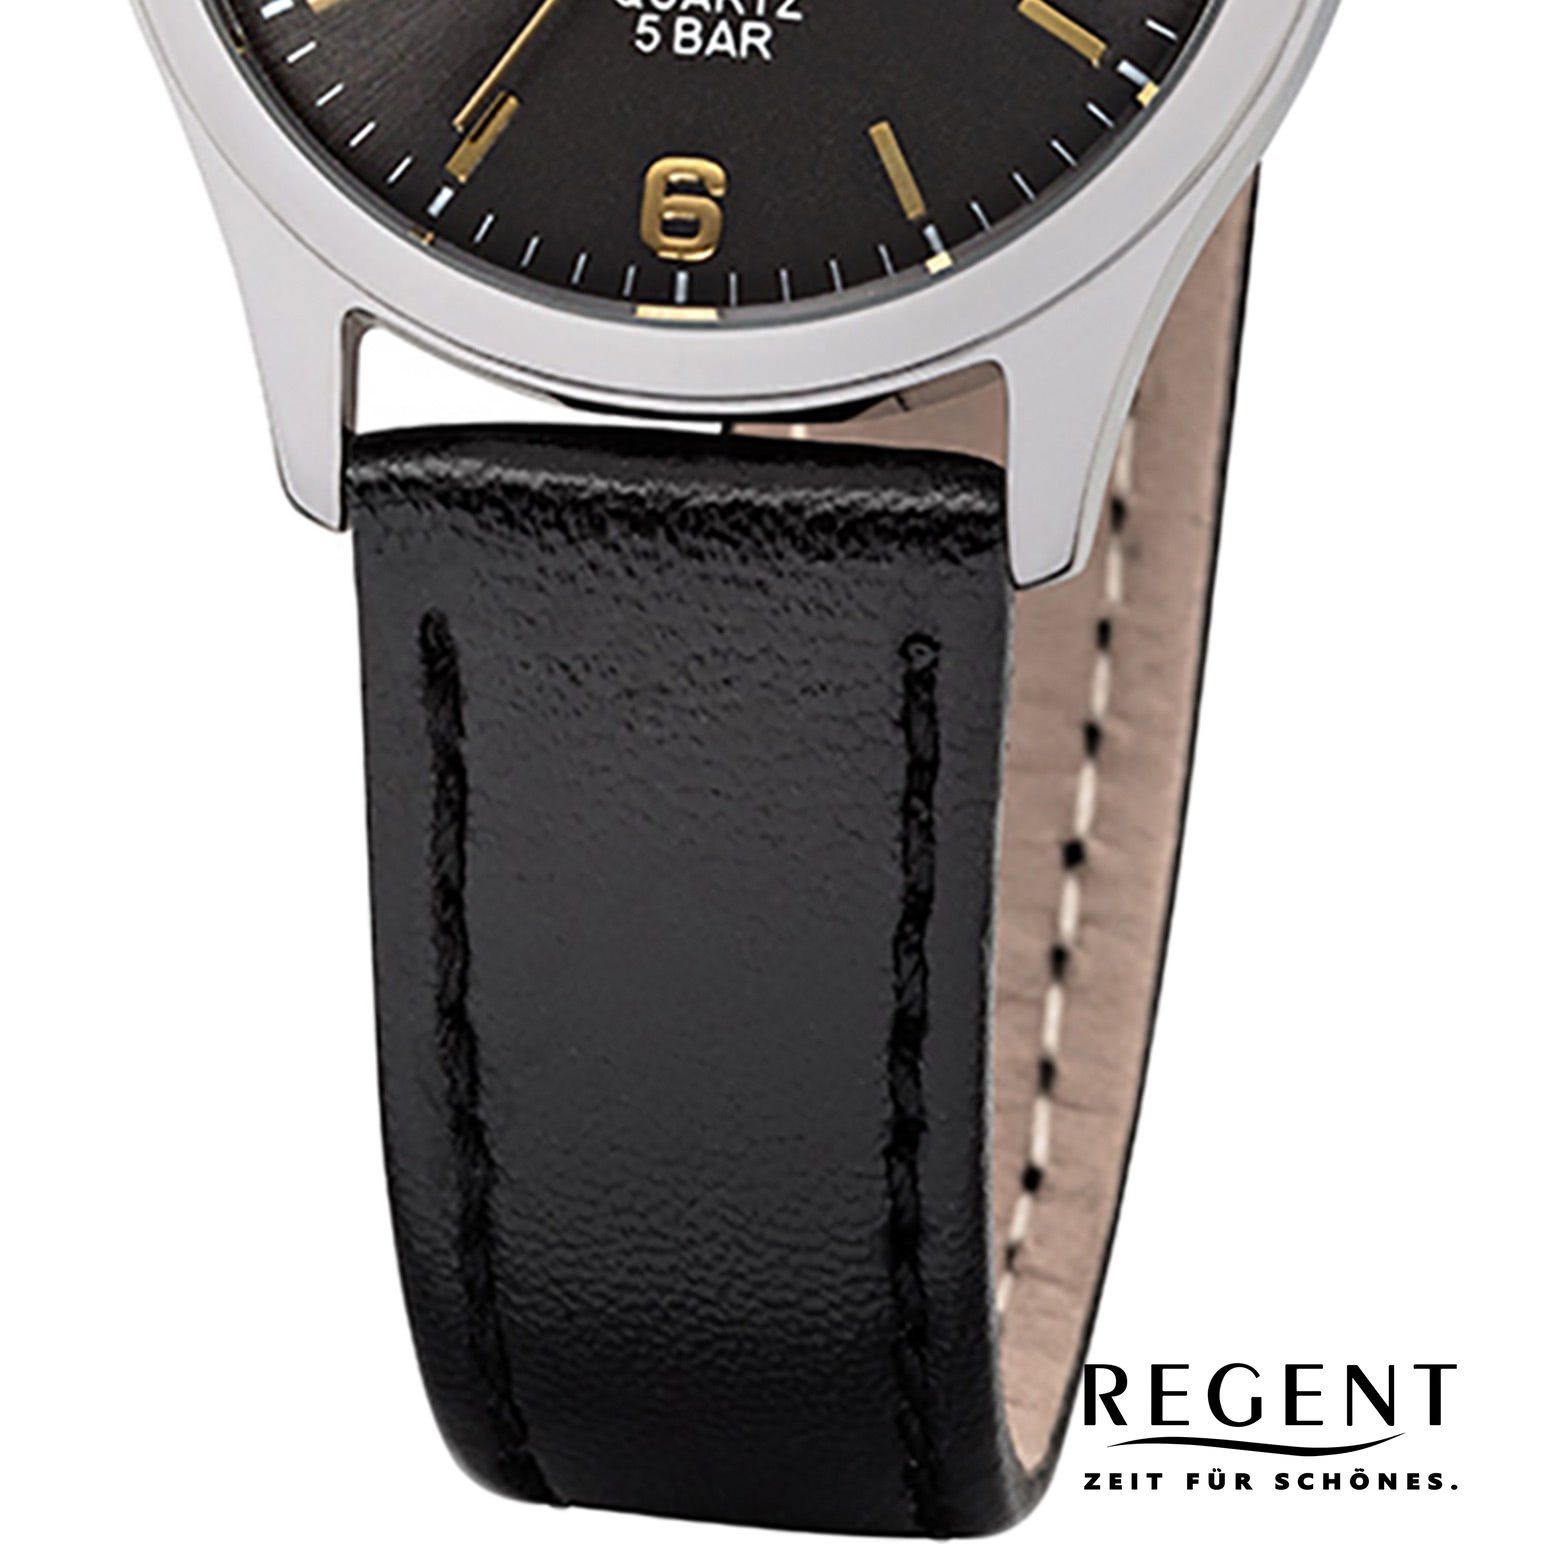 Regent Quarzuhr rund, Analog, klein Damen schwarz Lederarmband Regent (ca. 29mm), Armbanduhr Damen-Armbanduhr